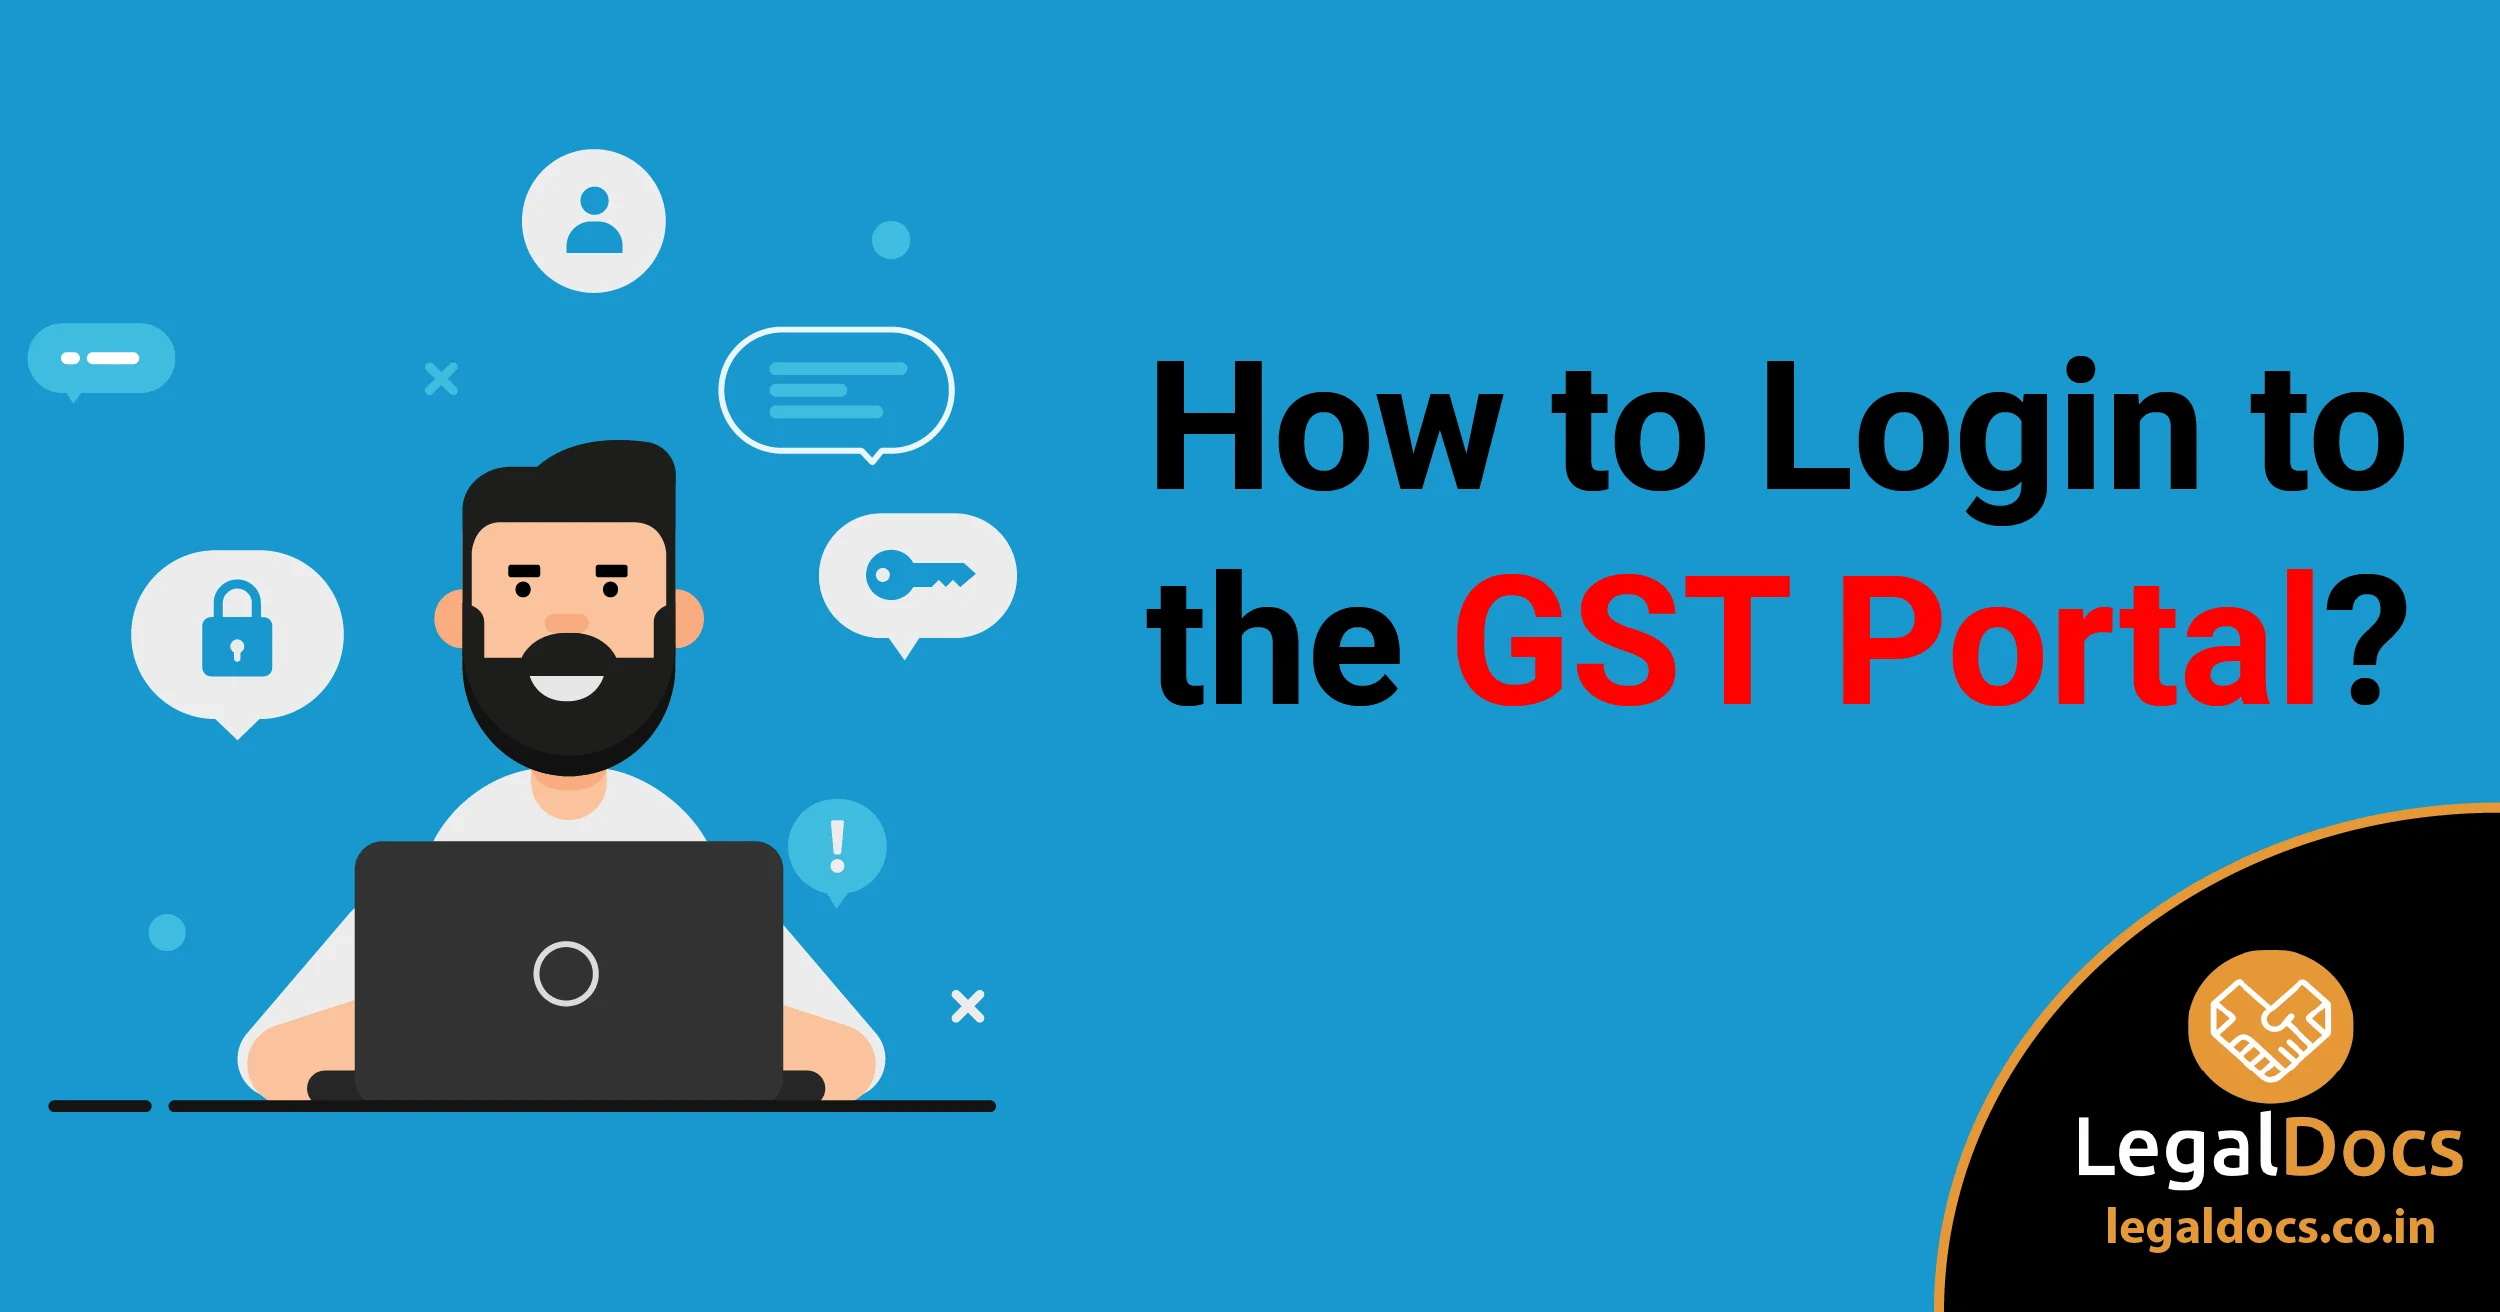 GST Login - How to Login to Government GST Portal? - LegalDocs